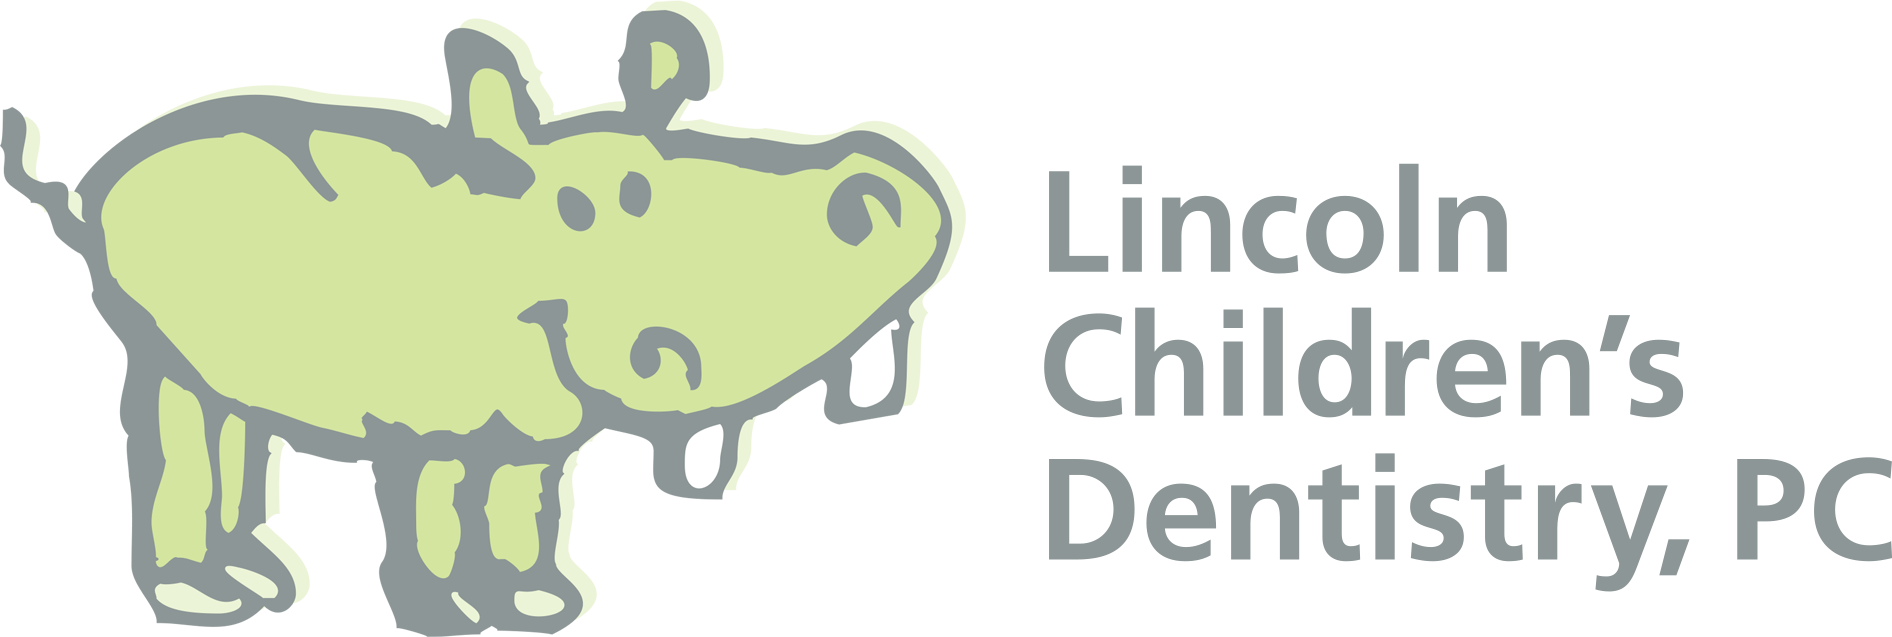 Lincoln Children’s Dentistry